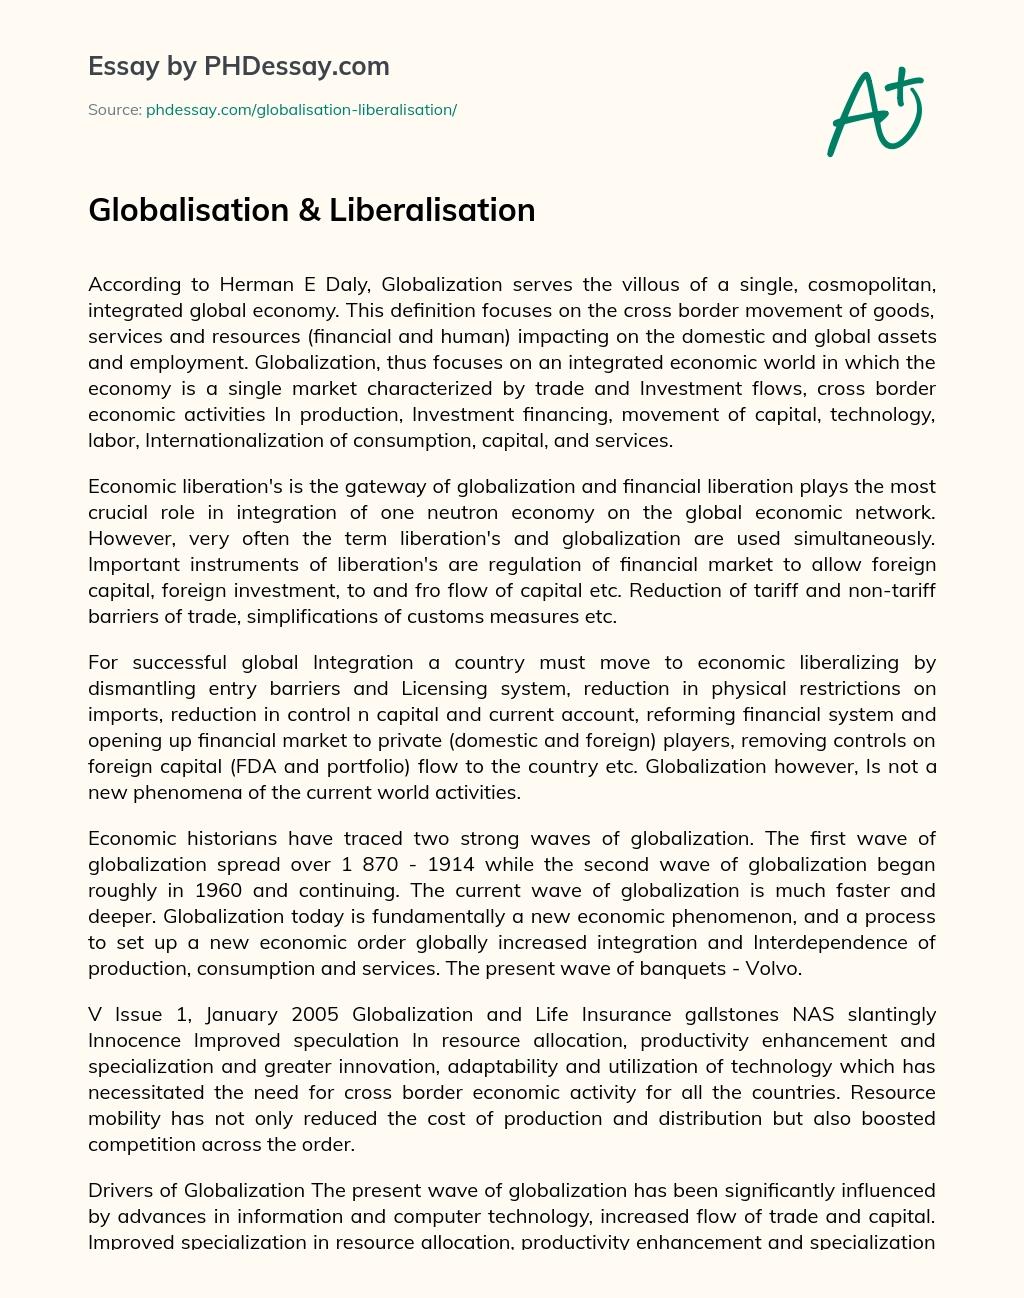 Globalisation & Liberalisation essay